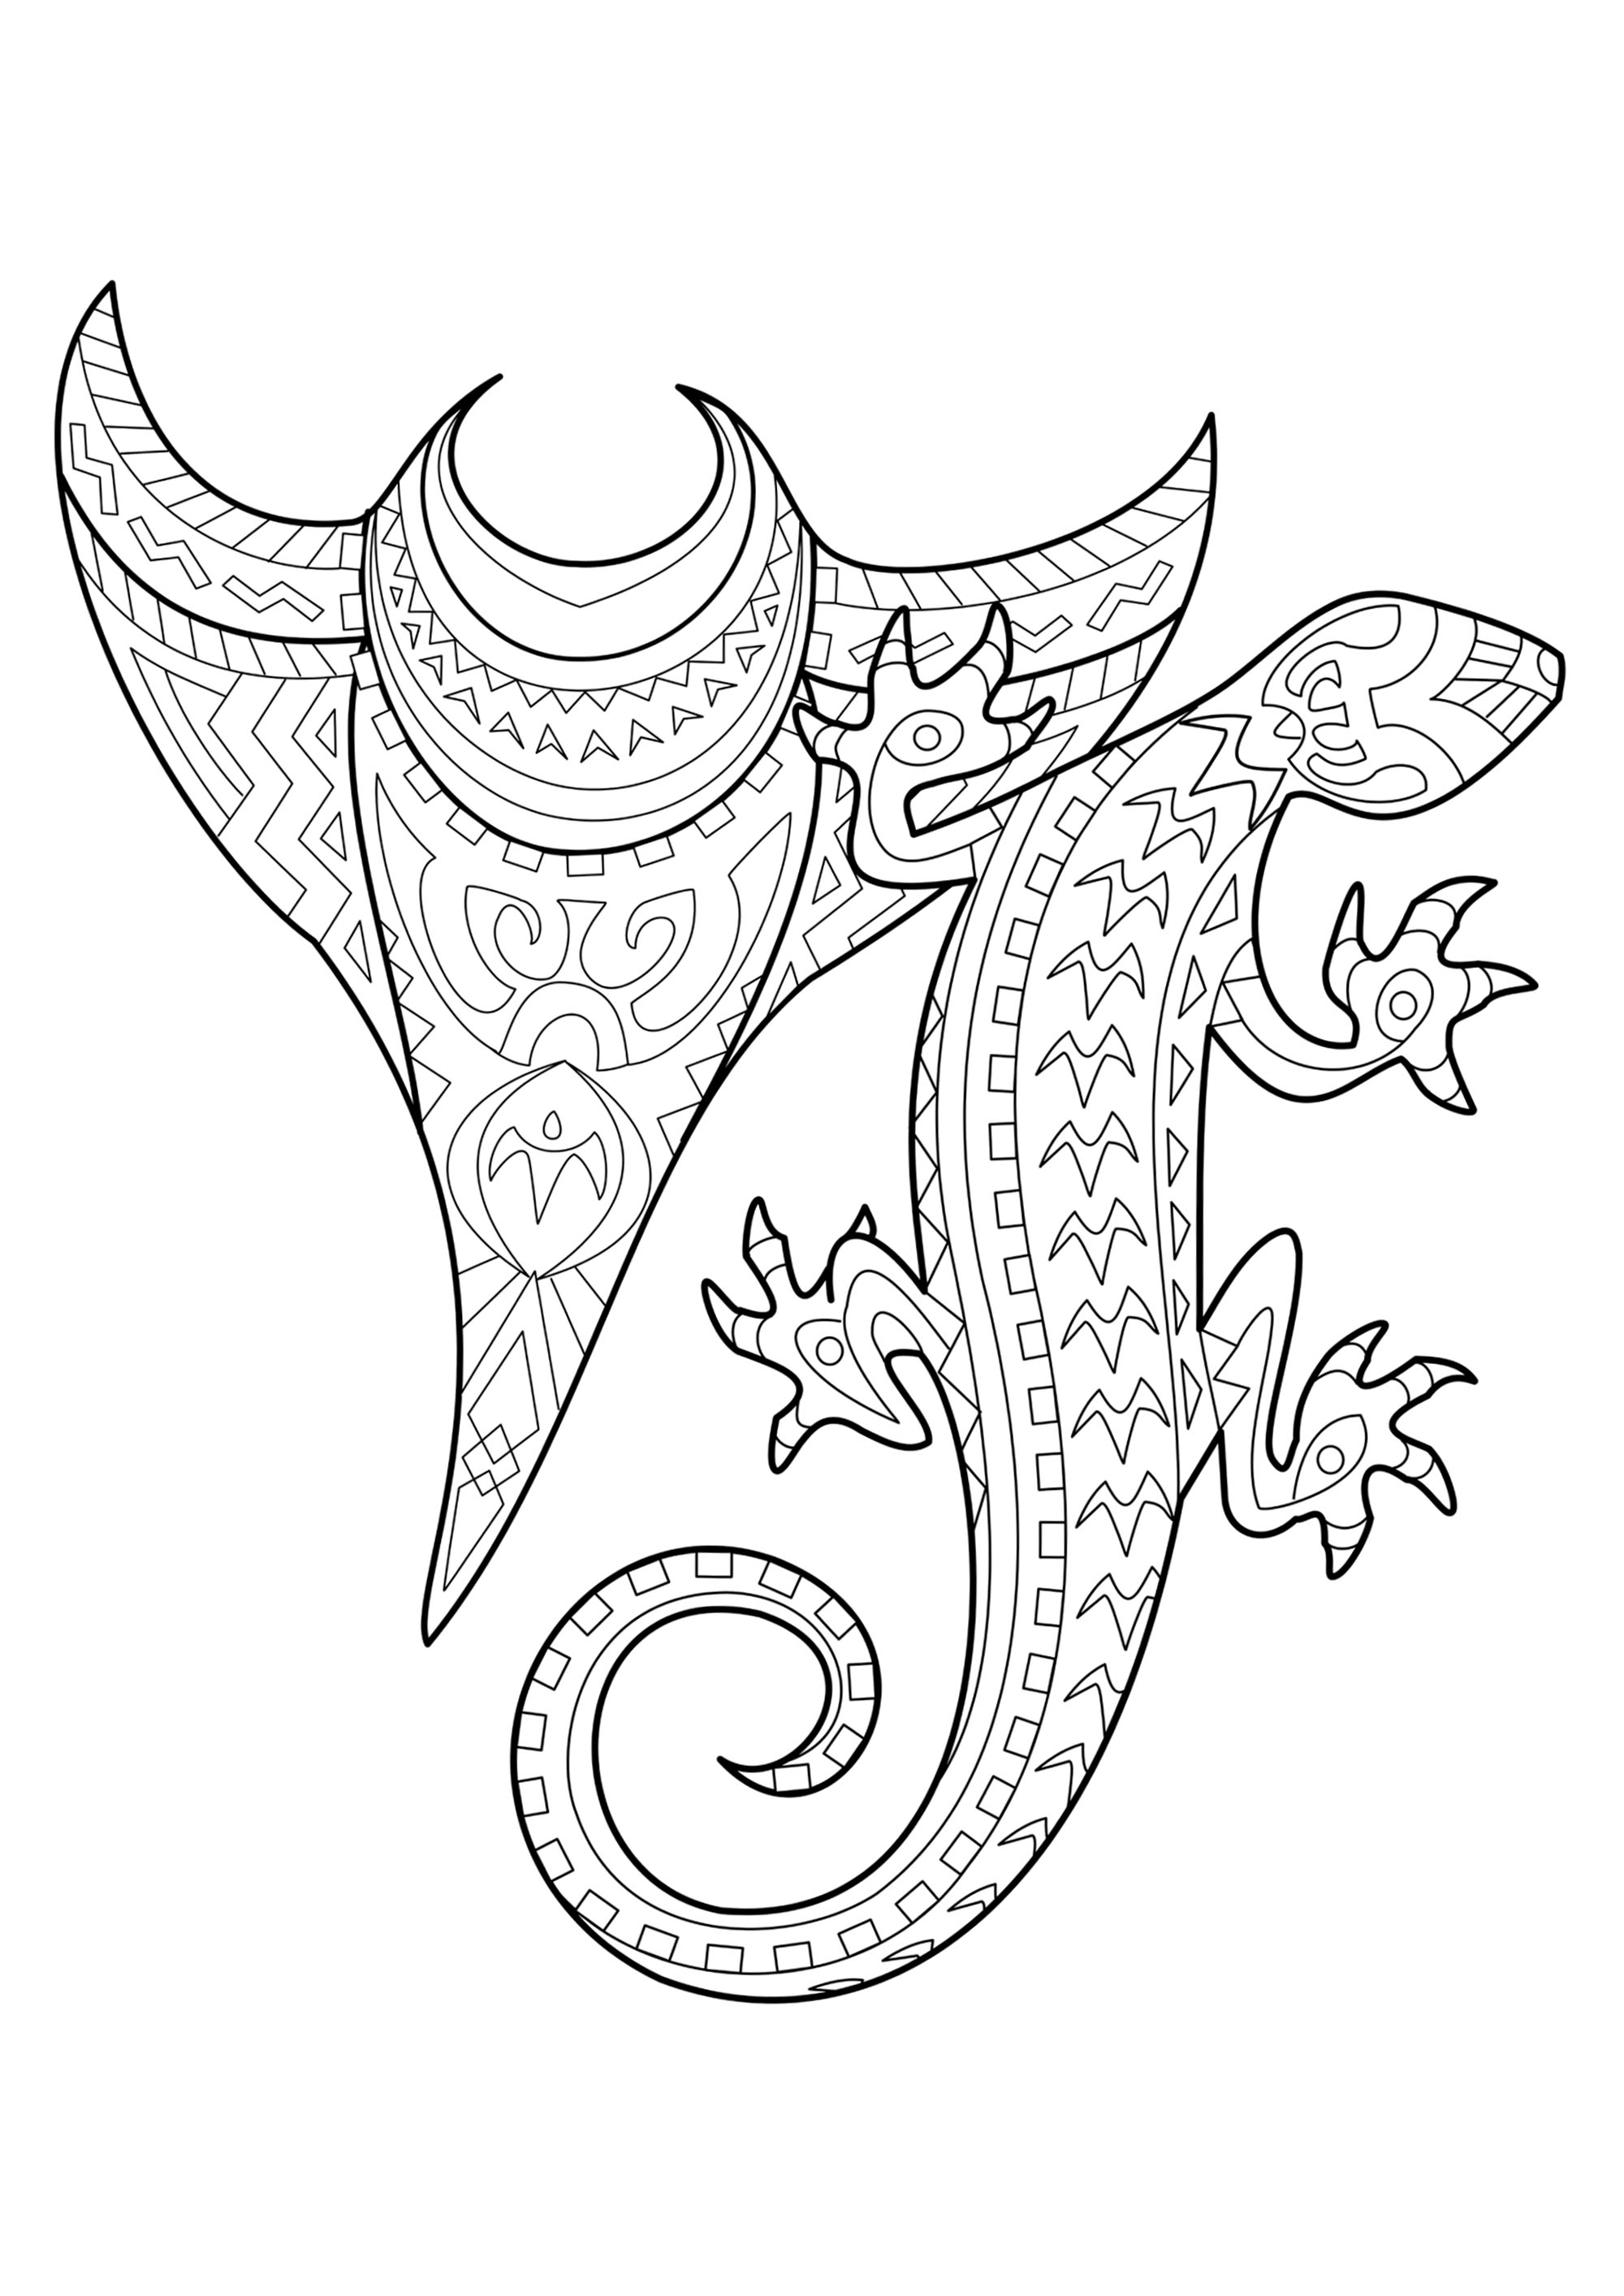 Tatouage Polynesien : Nga tama p PungaColoriage issu du livre Polynesian Tattoos : 42 Modern Tribal Designs to Color and Explore par l'artiste italien Roberto “GiErre” Gemori.A découvrir ici : www.shambhala.com/polynesian-tattoos.html Site de l'artiste : Tattootribes.com